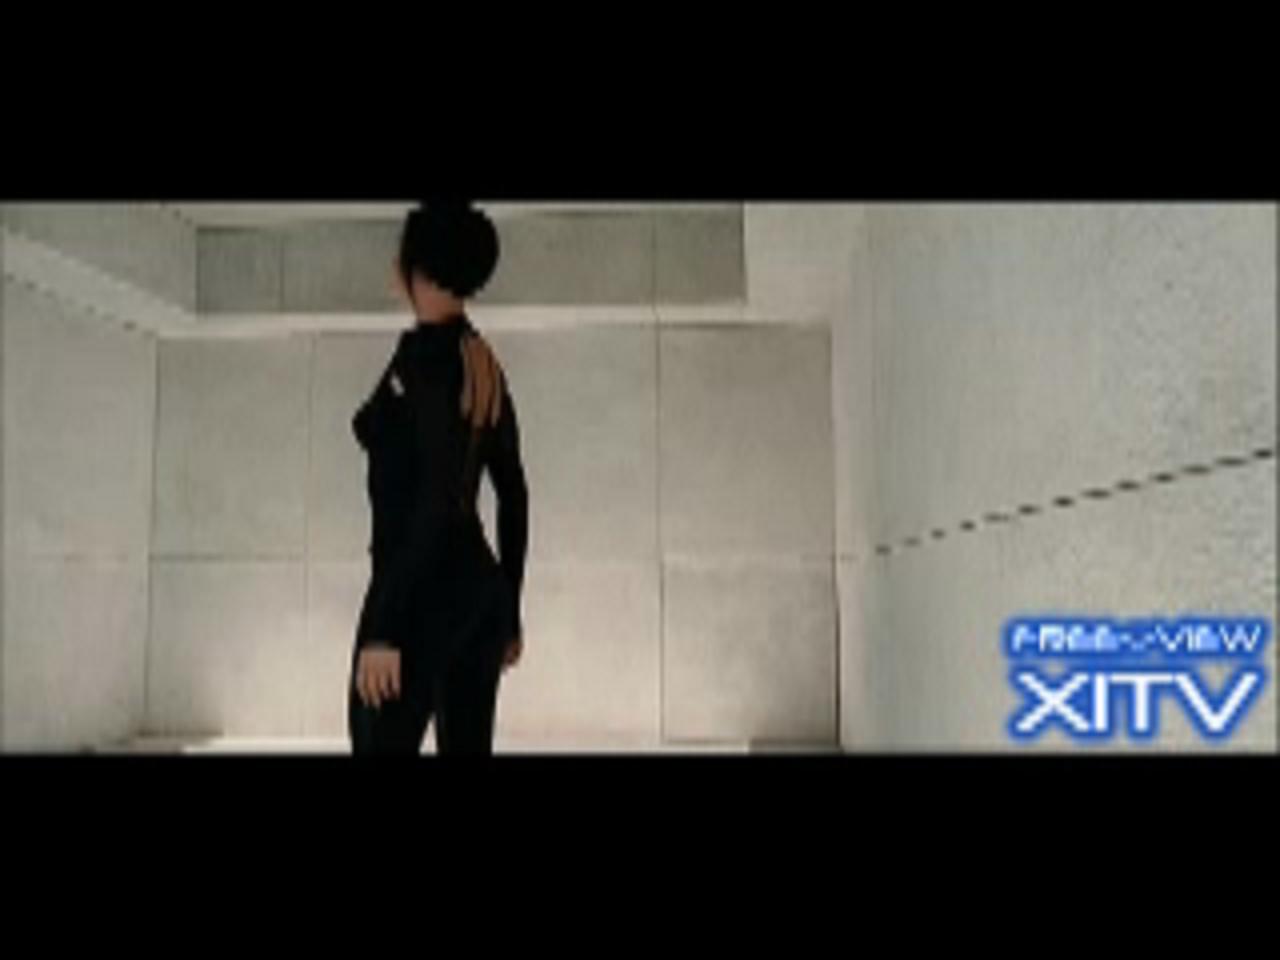 XITV FREE <> VIEW "AEON FLUX!" Starring Charlize Theron!